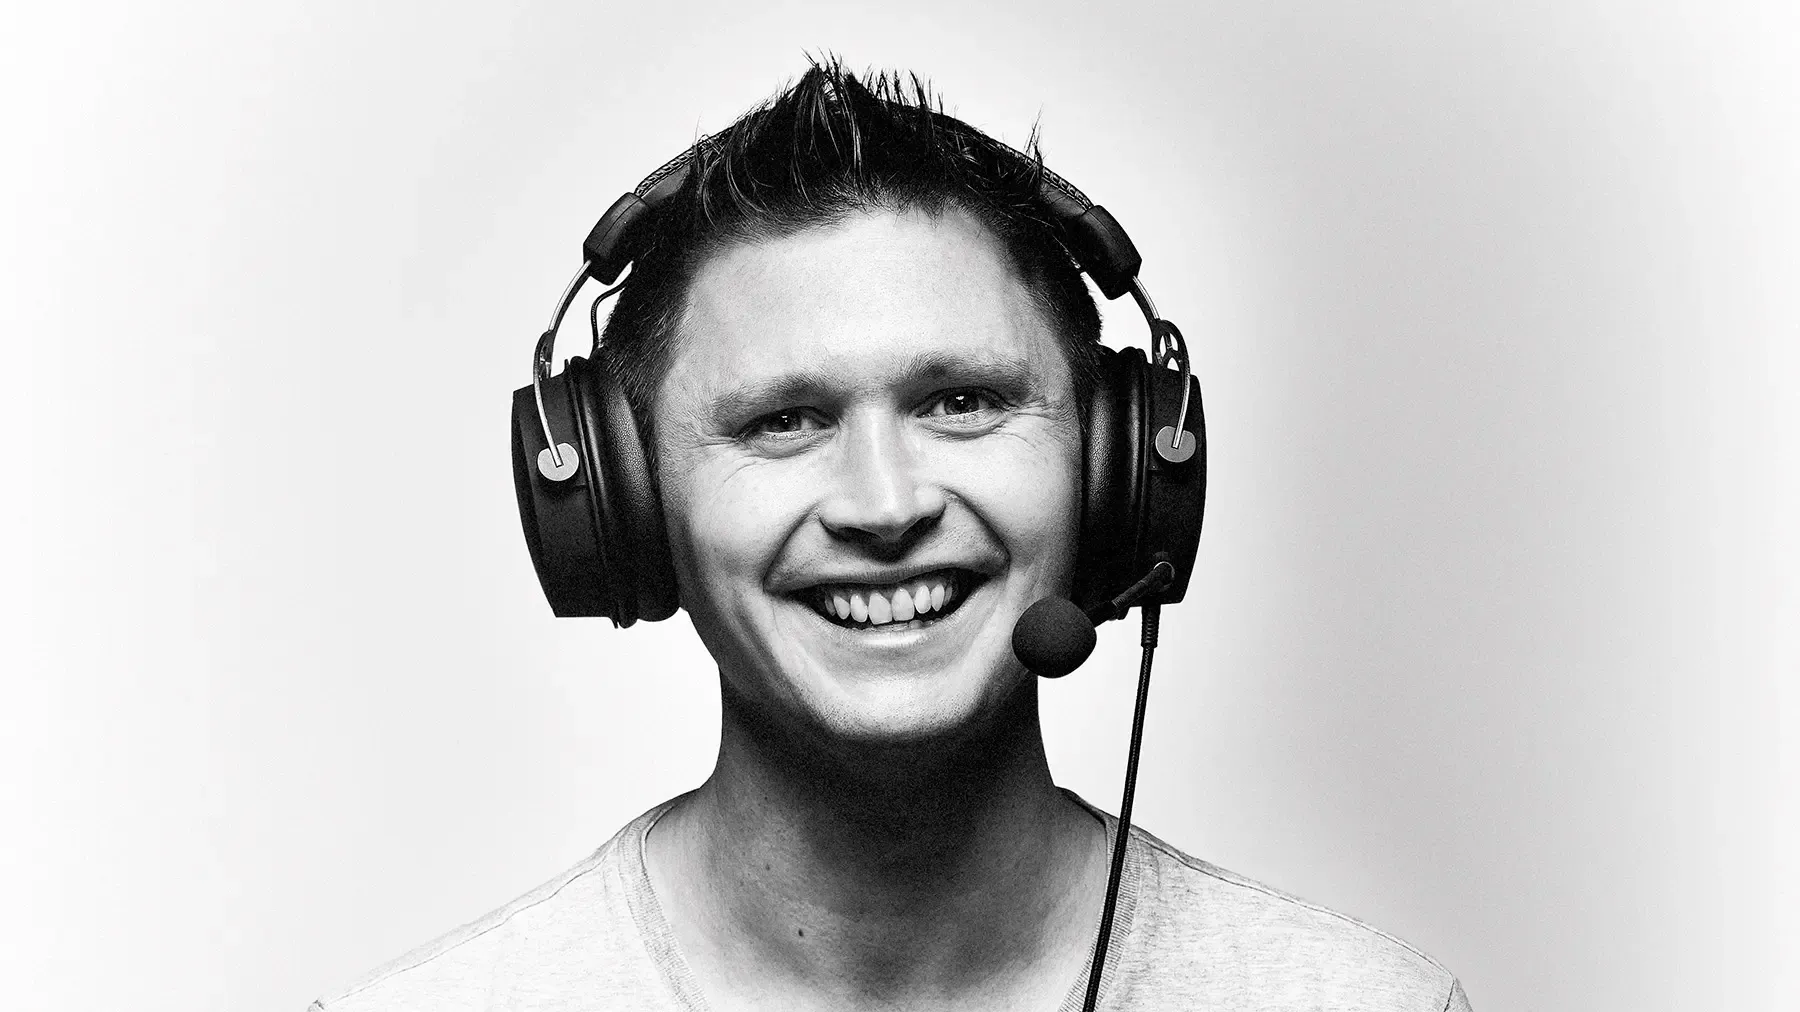 Black and white photo of man wearing gaming headset, smiling to camera.